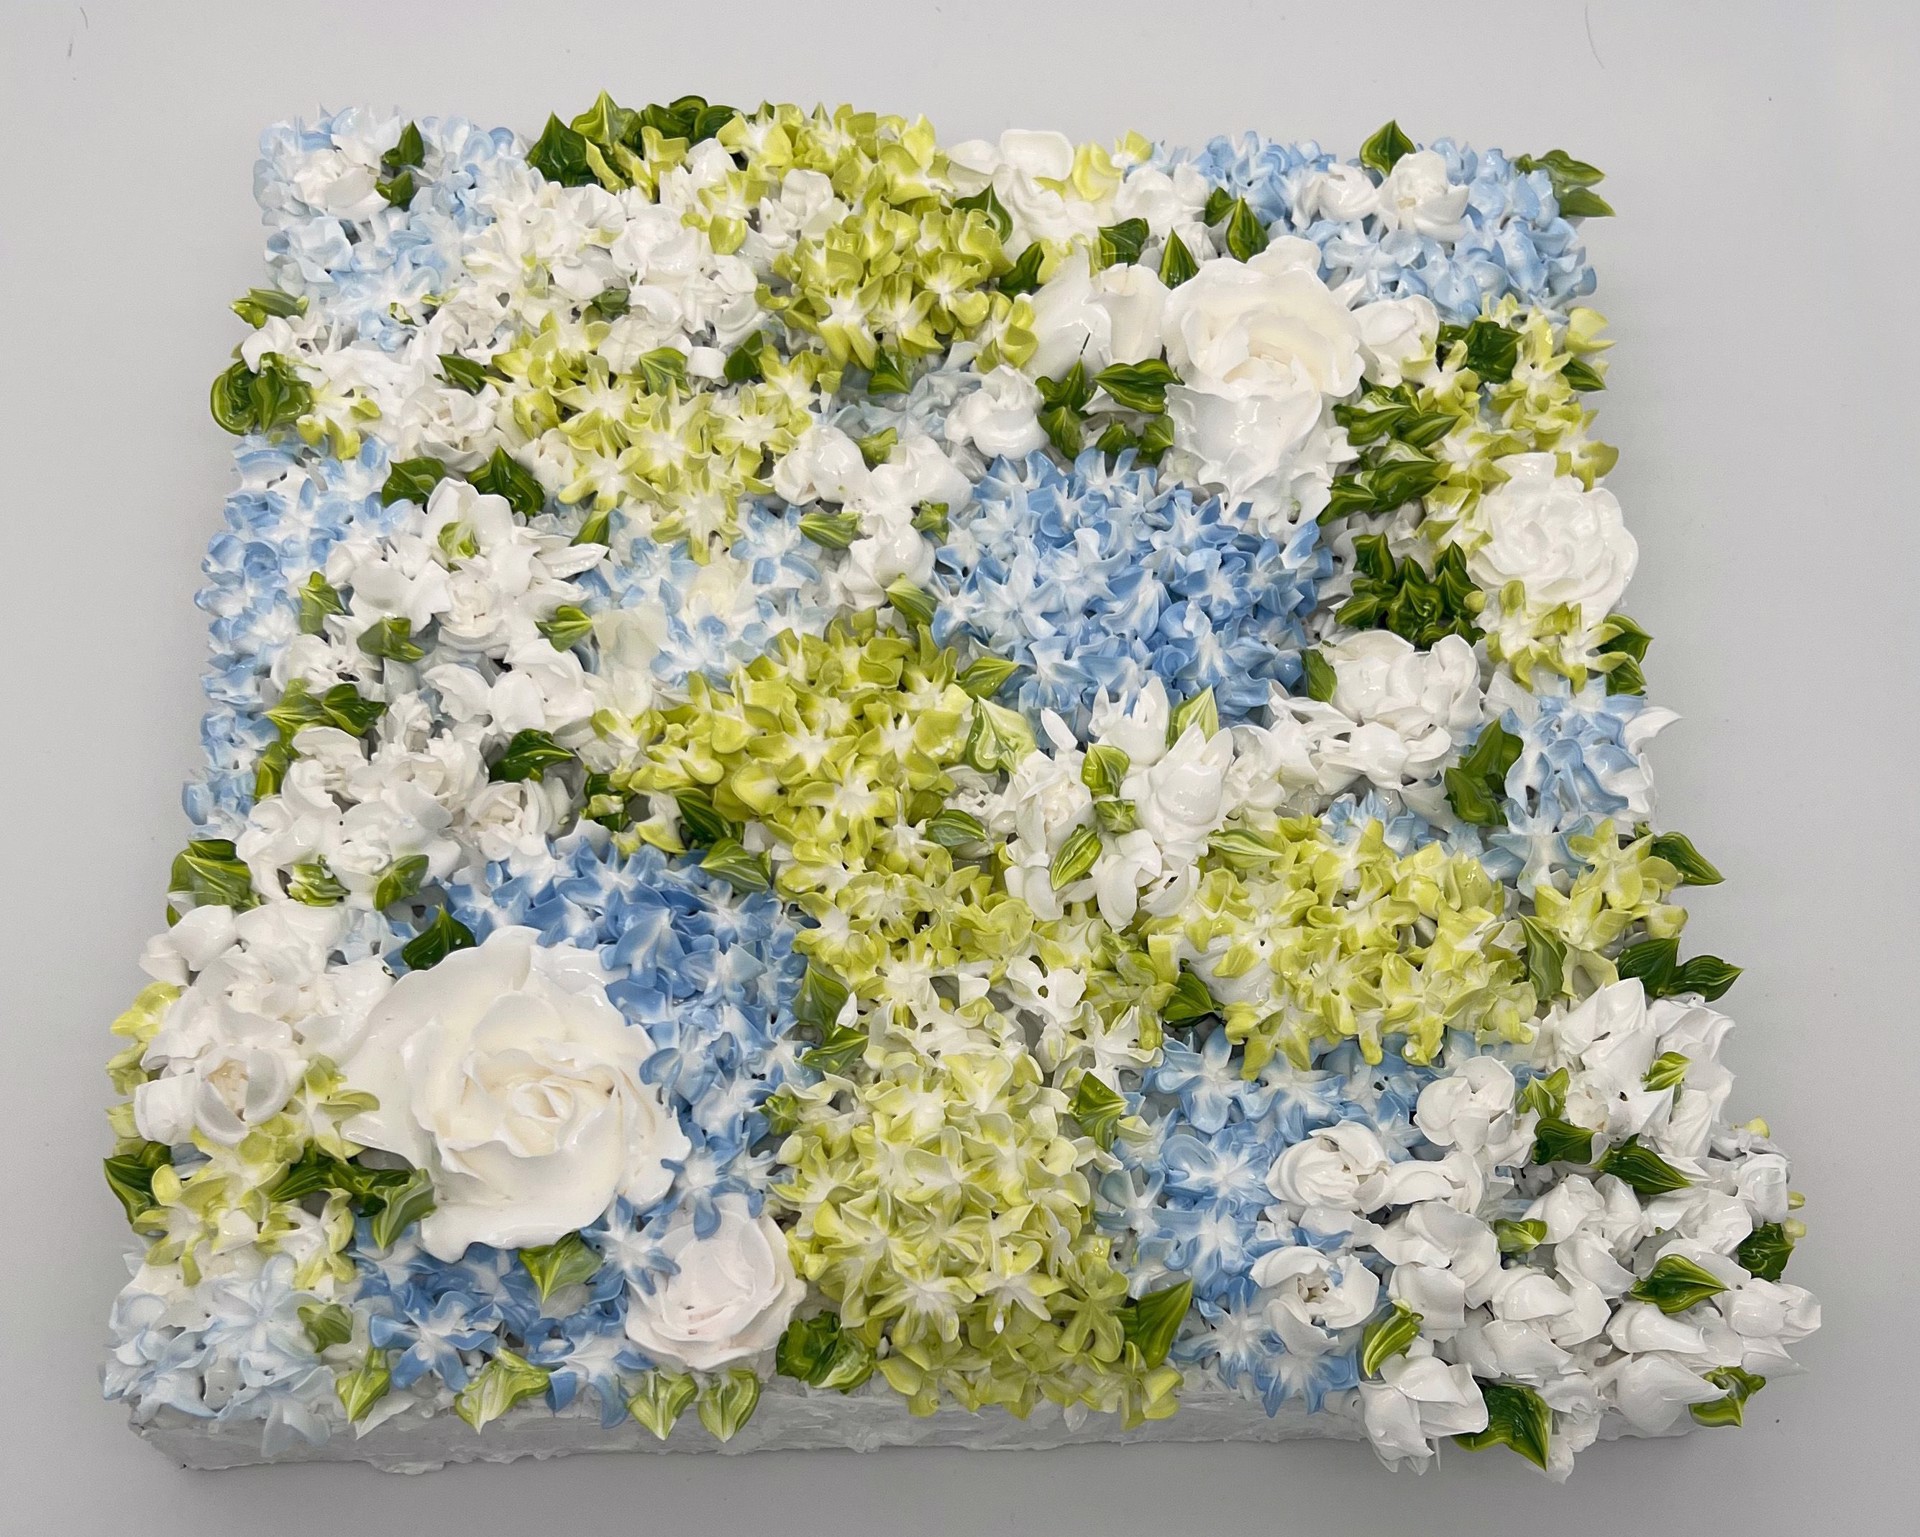 Floral 503 by Judith Dunbar